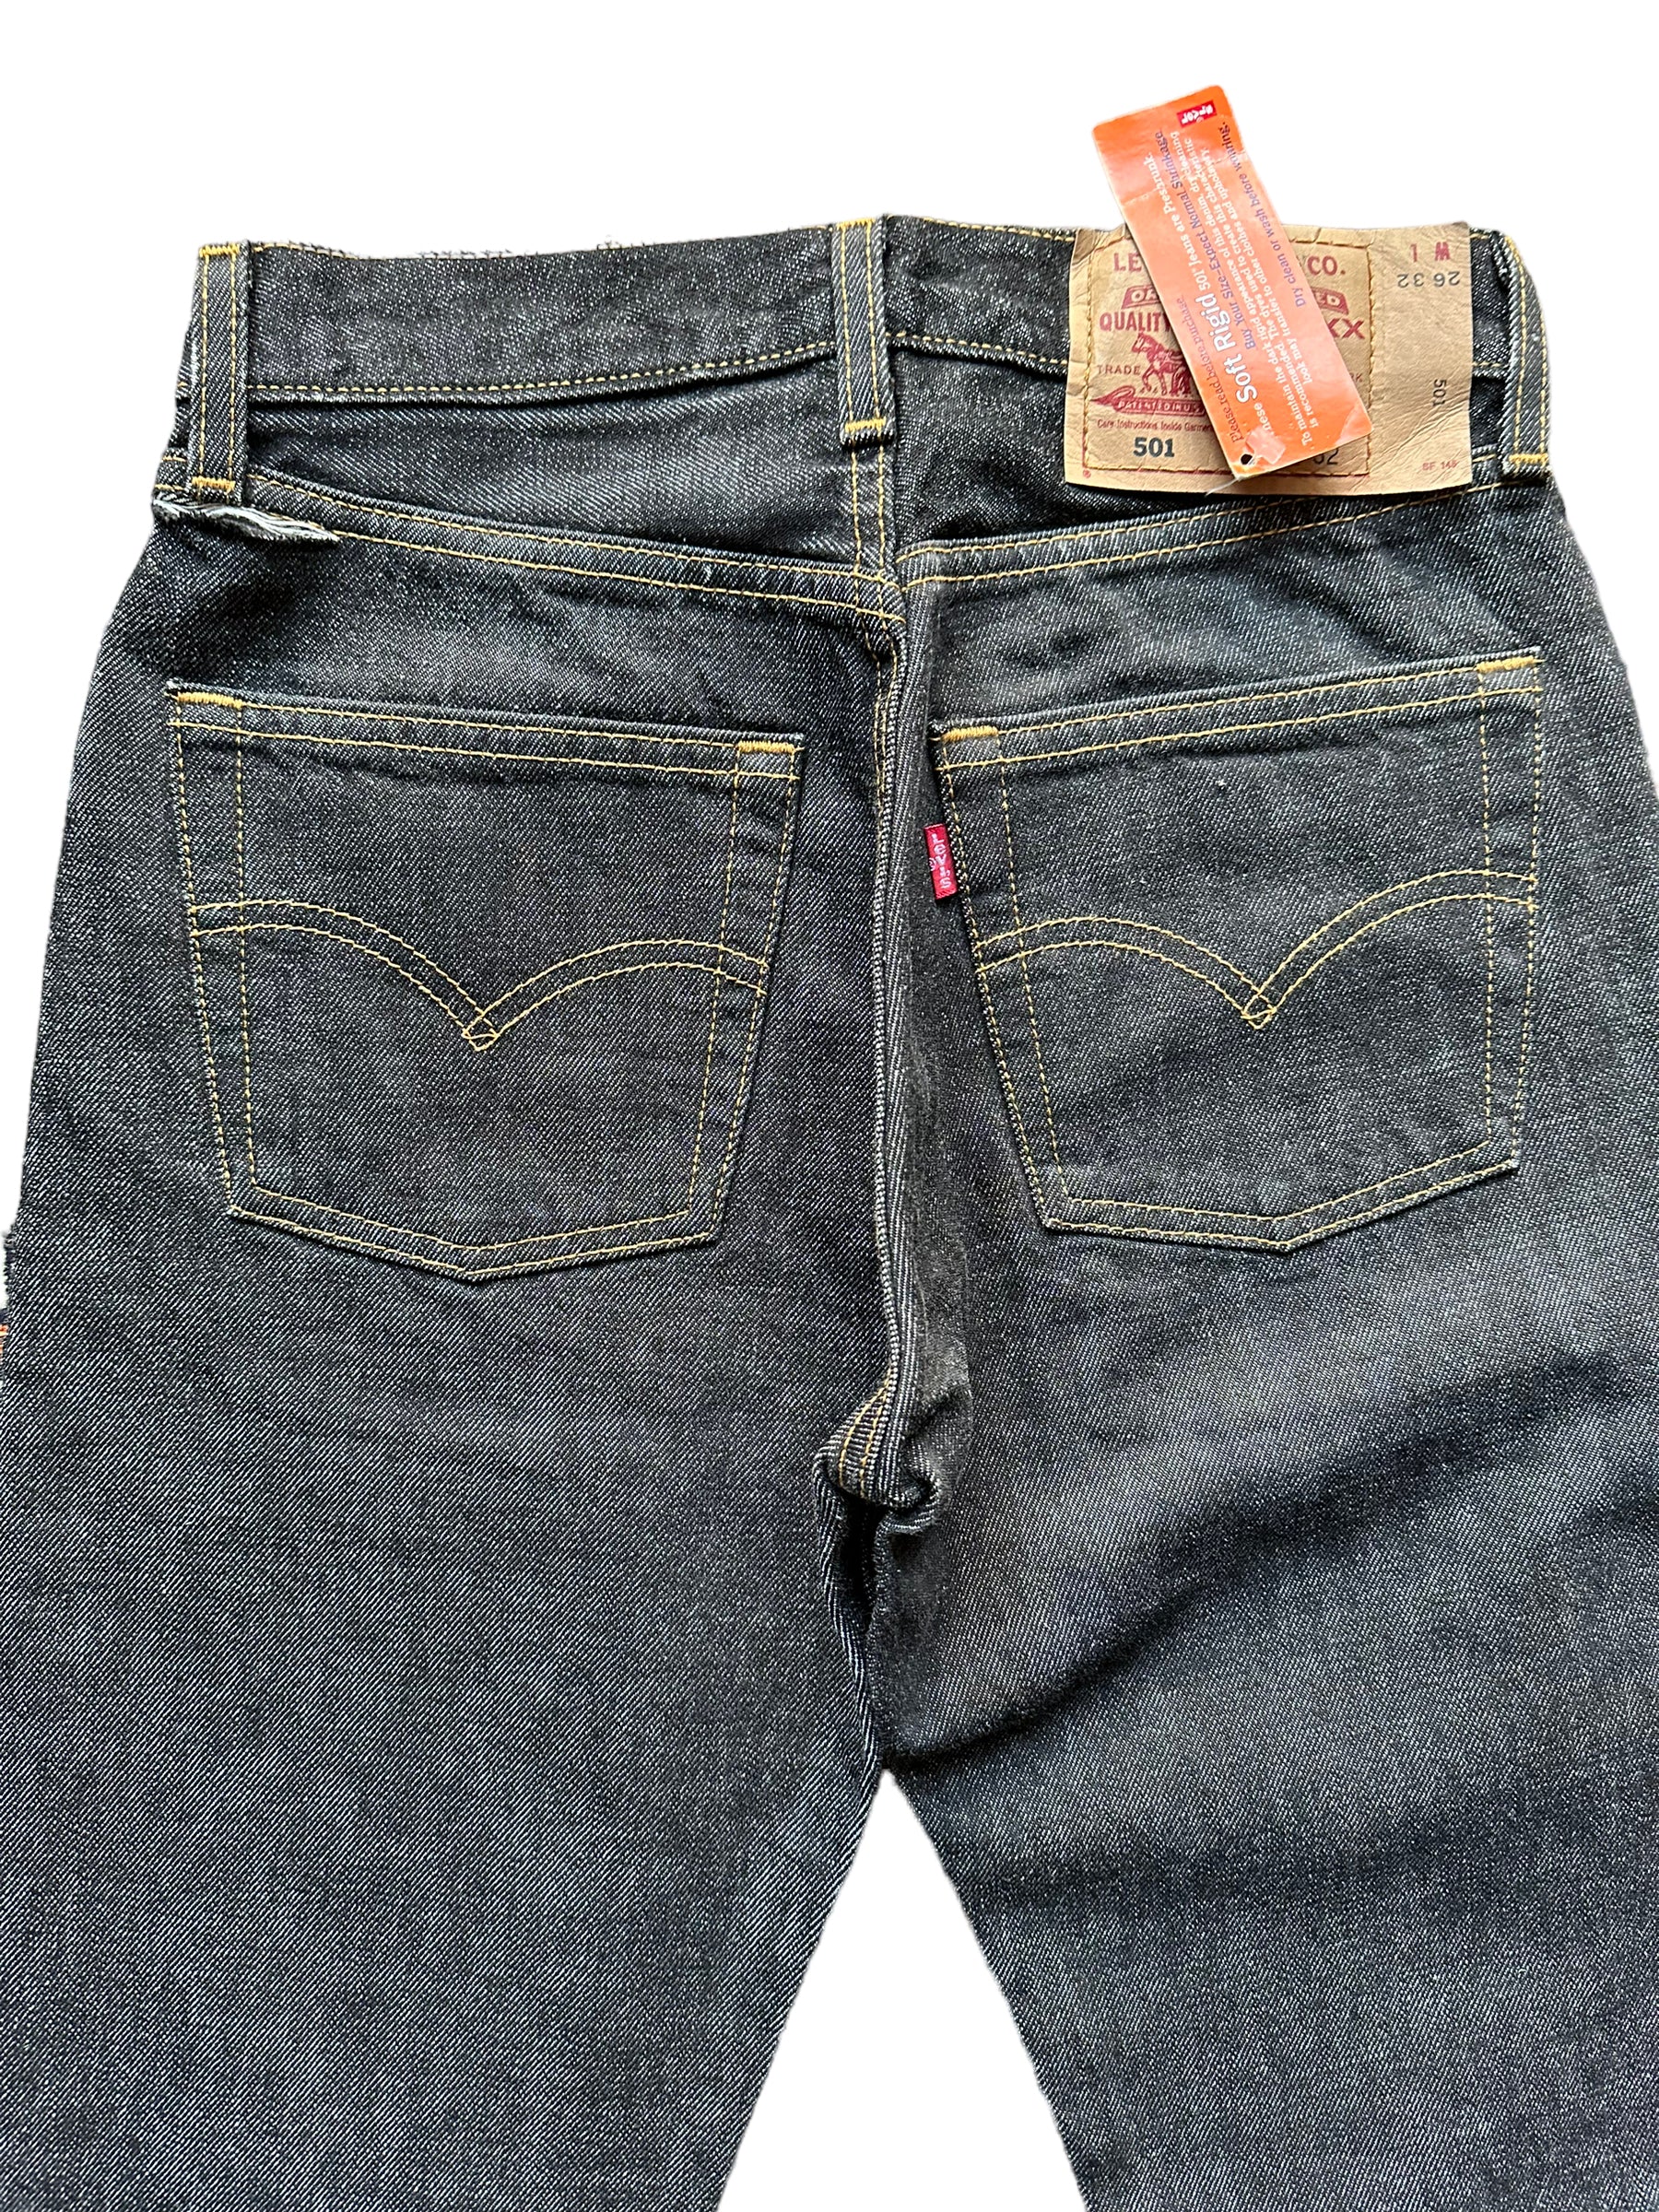 Back pockets of Deadstock 90s USA Levi's 501 Black Jeans 26x33 | Seattle Deadstock Vintage Jeans | Barn Owl Vintage Denim